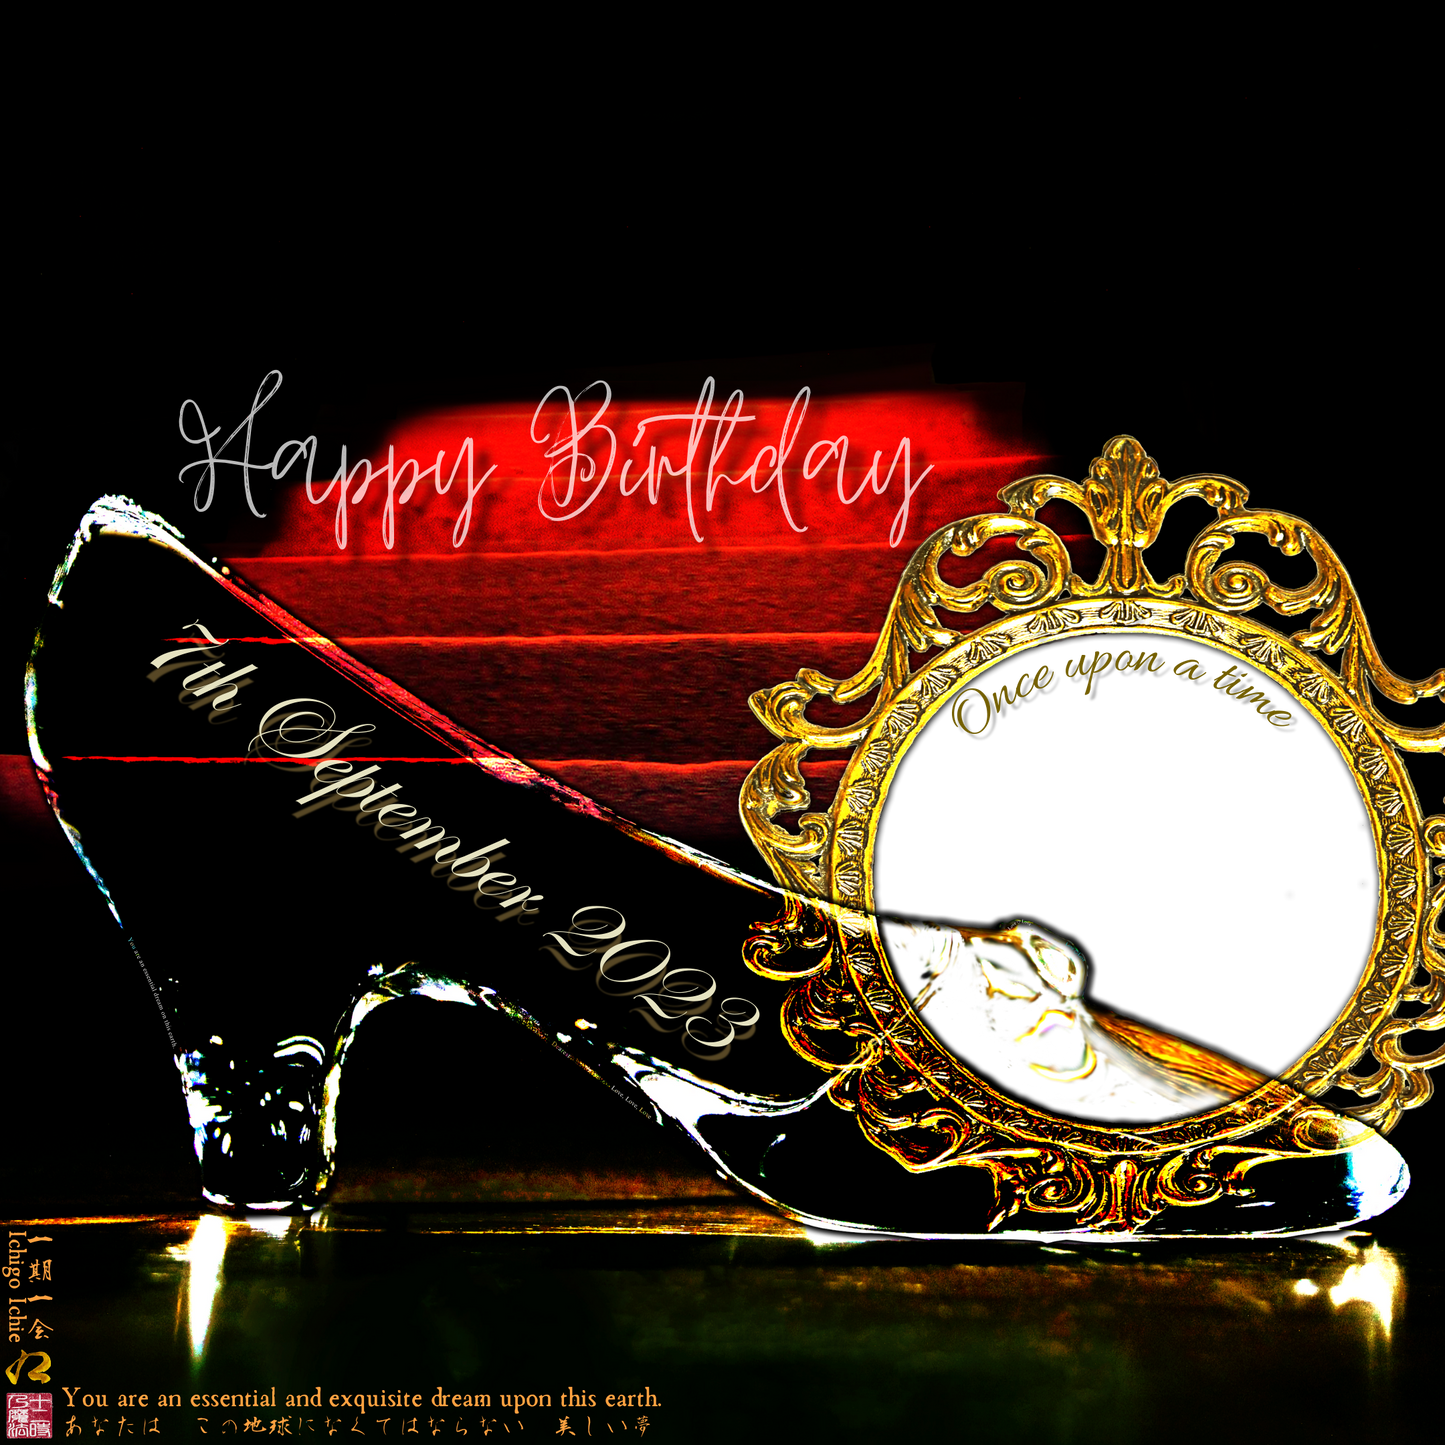 Happy Birthday Glass Slipper "Ichigo Ichie" 7th September 2023 the Right (1-of-1) NFT Art